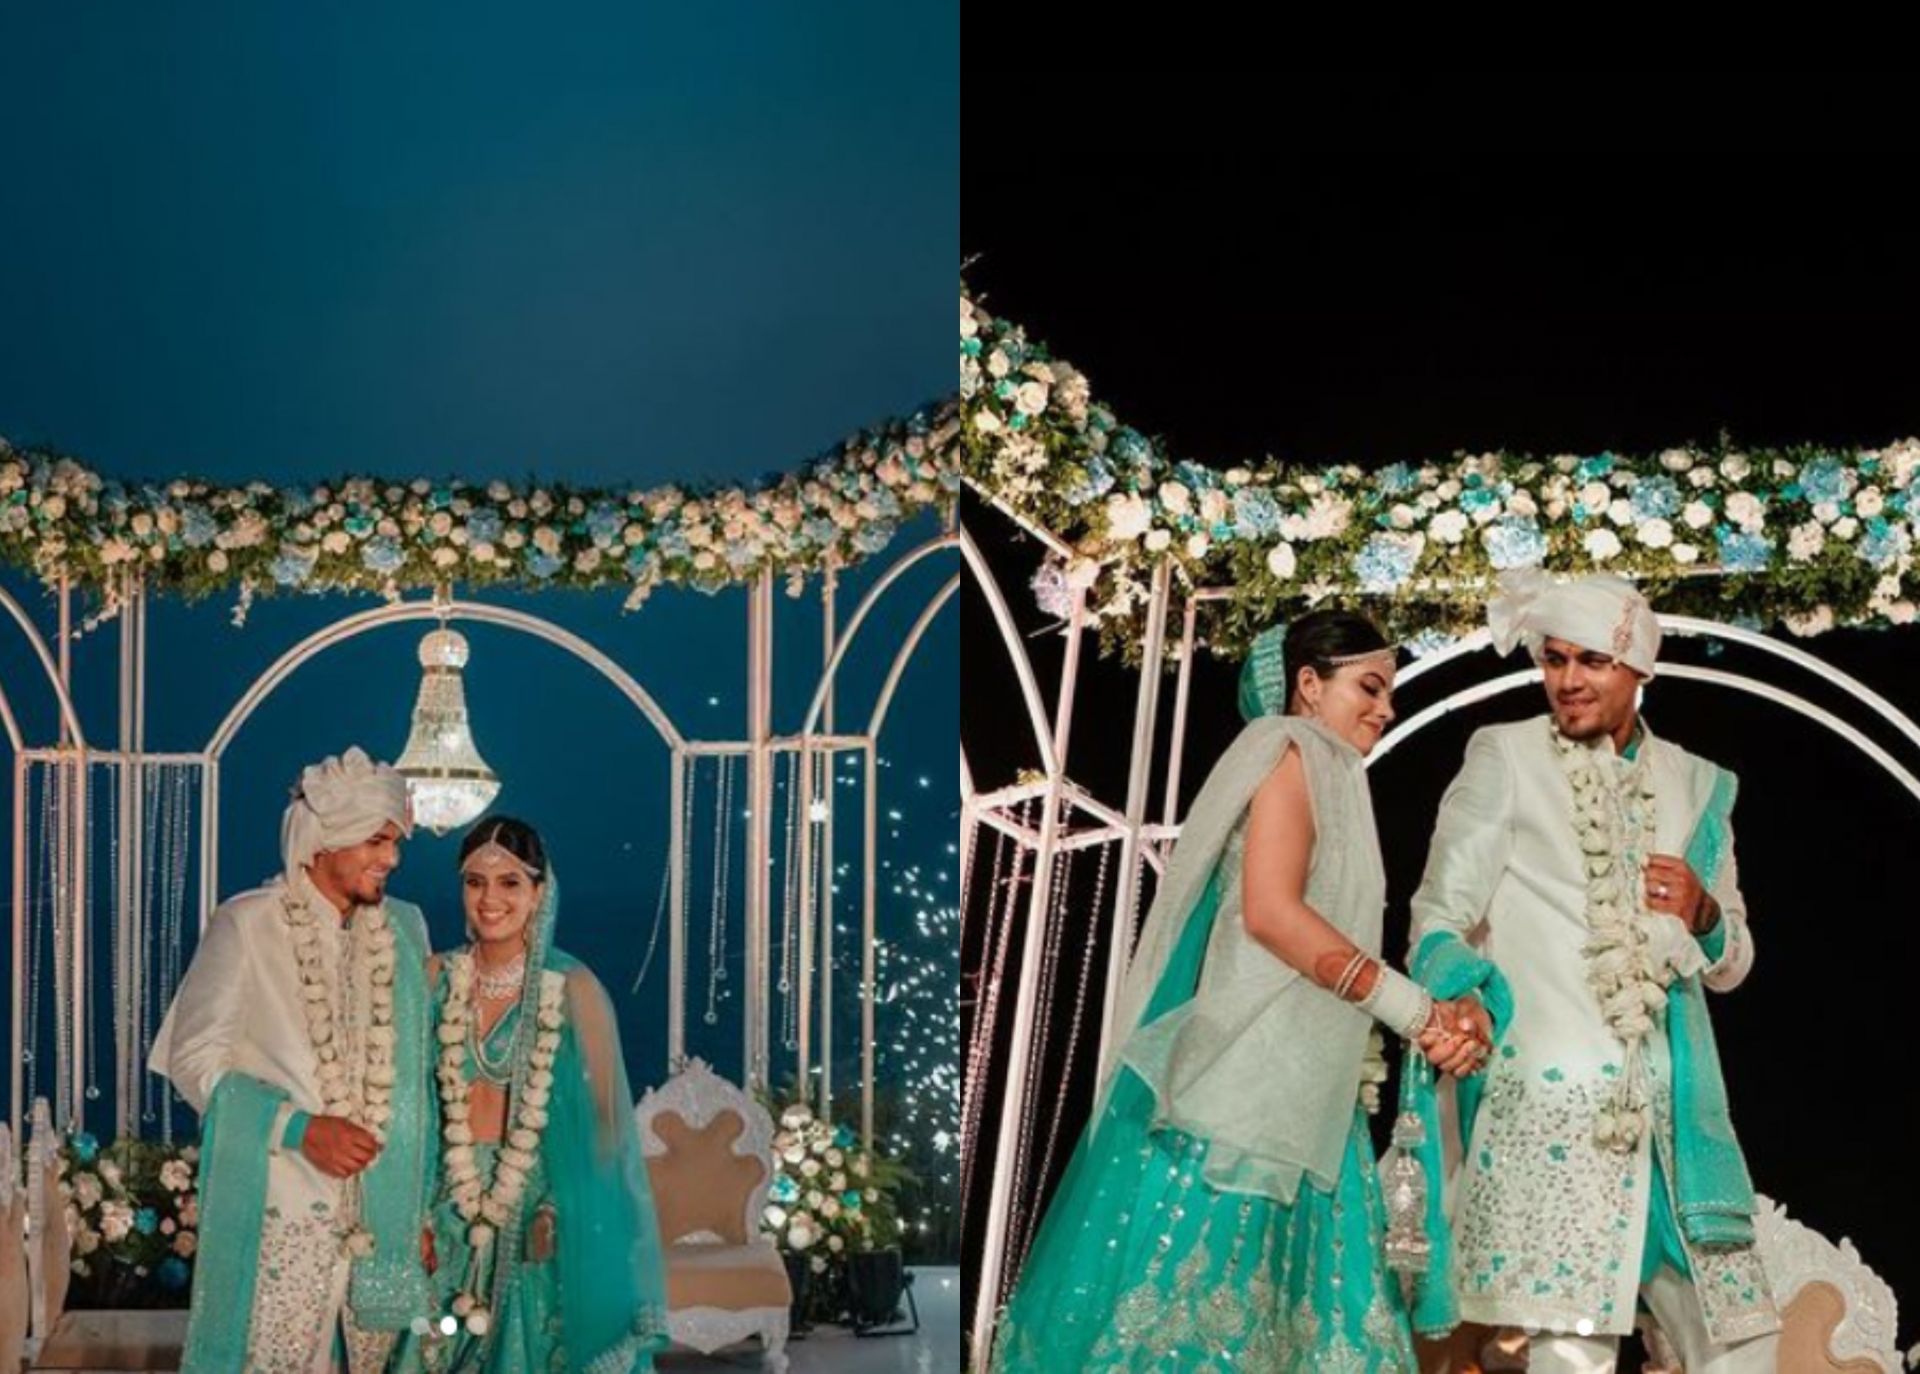 Rahul Chahar married Ishani Johar